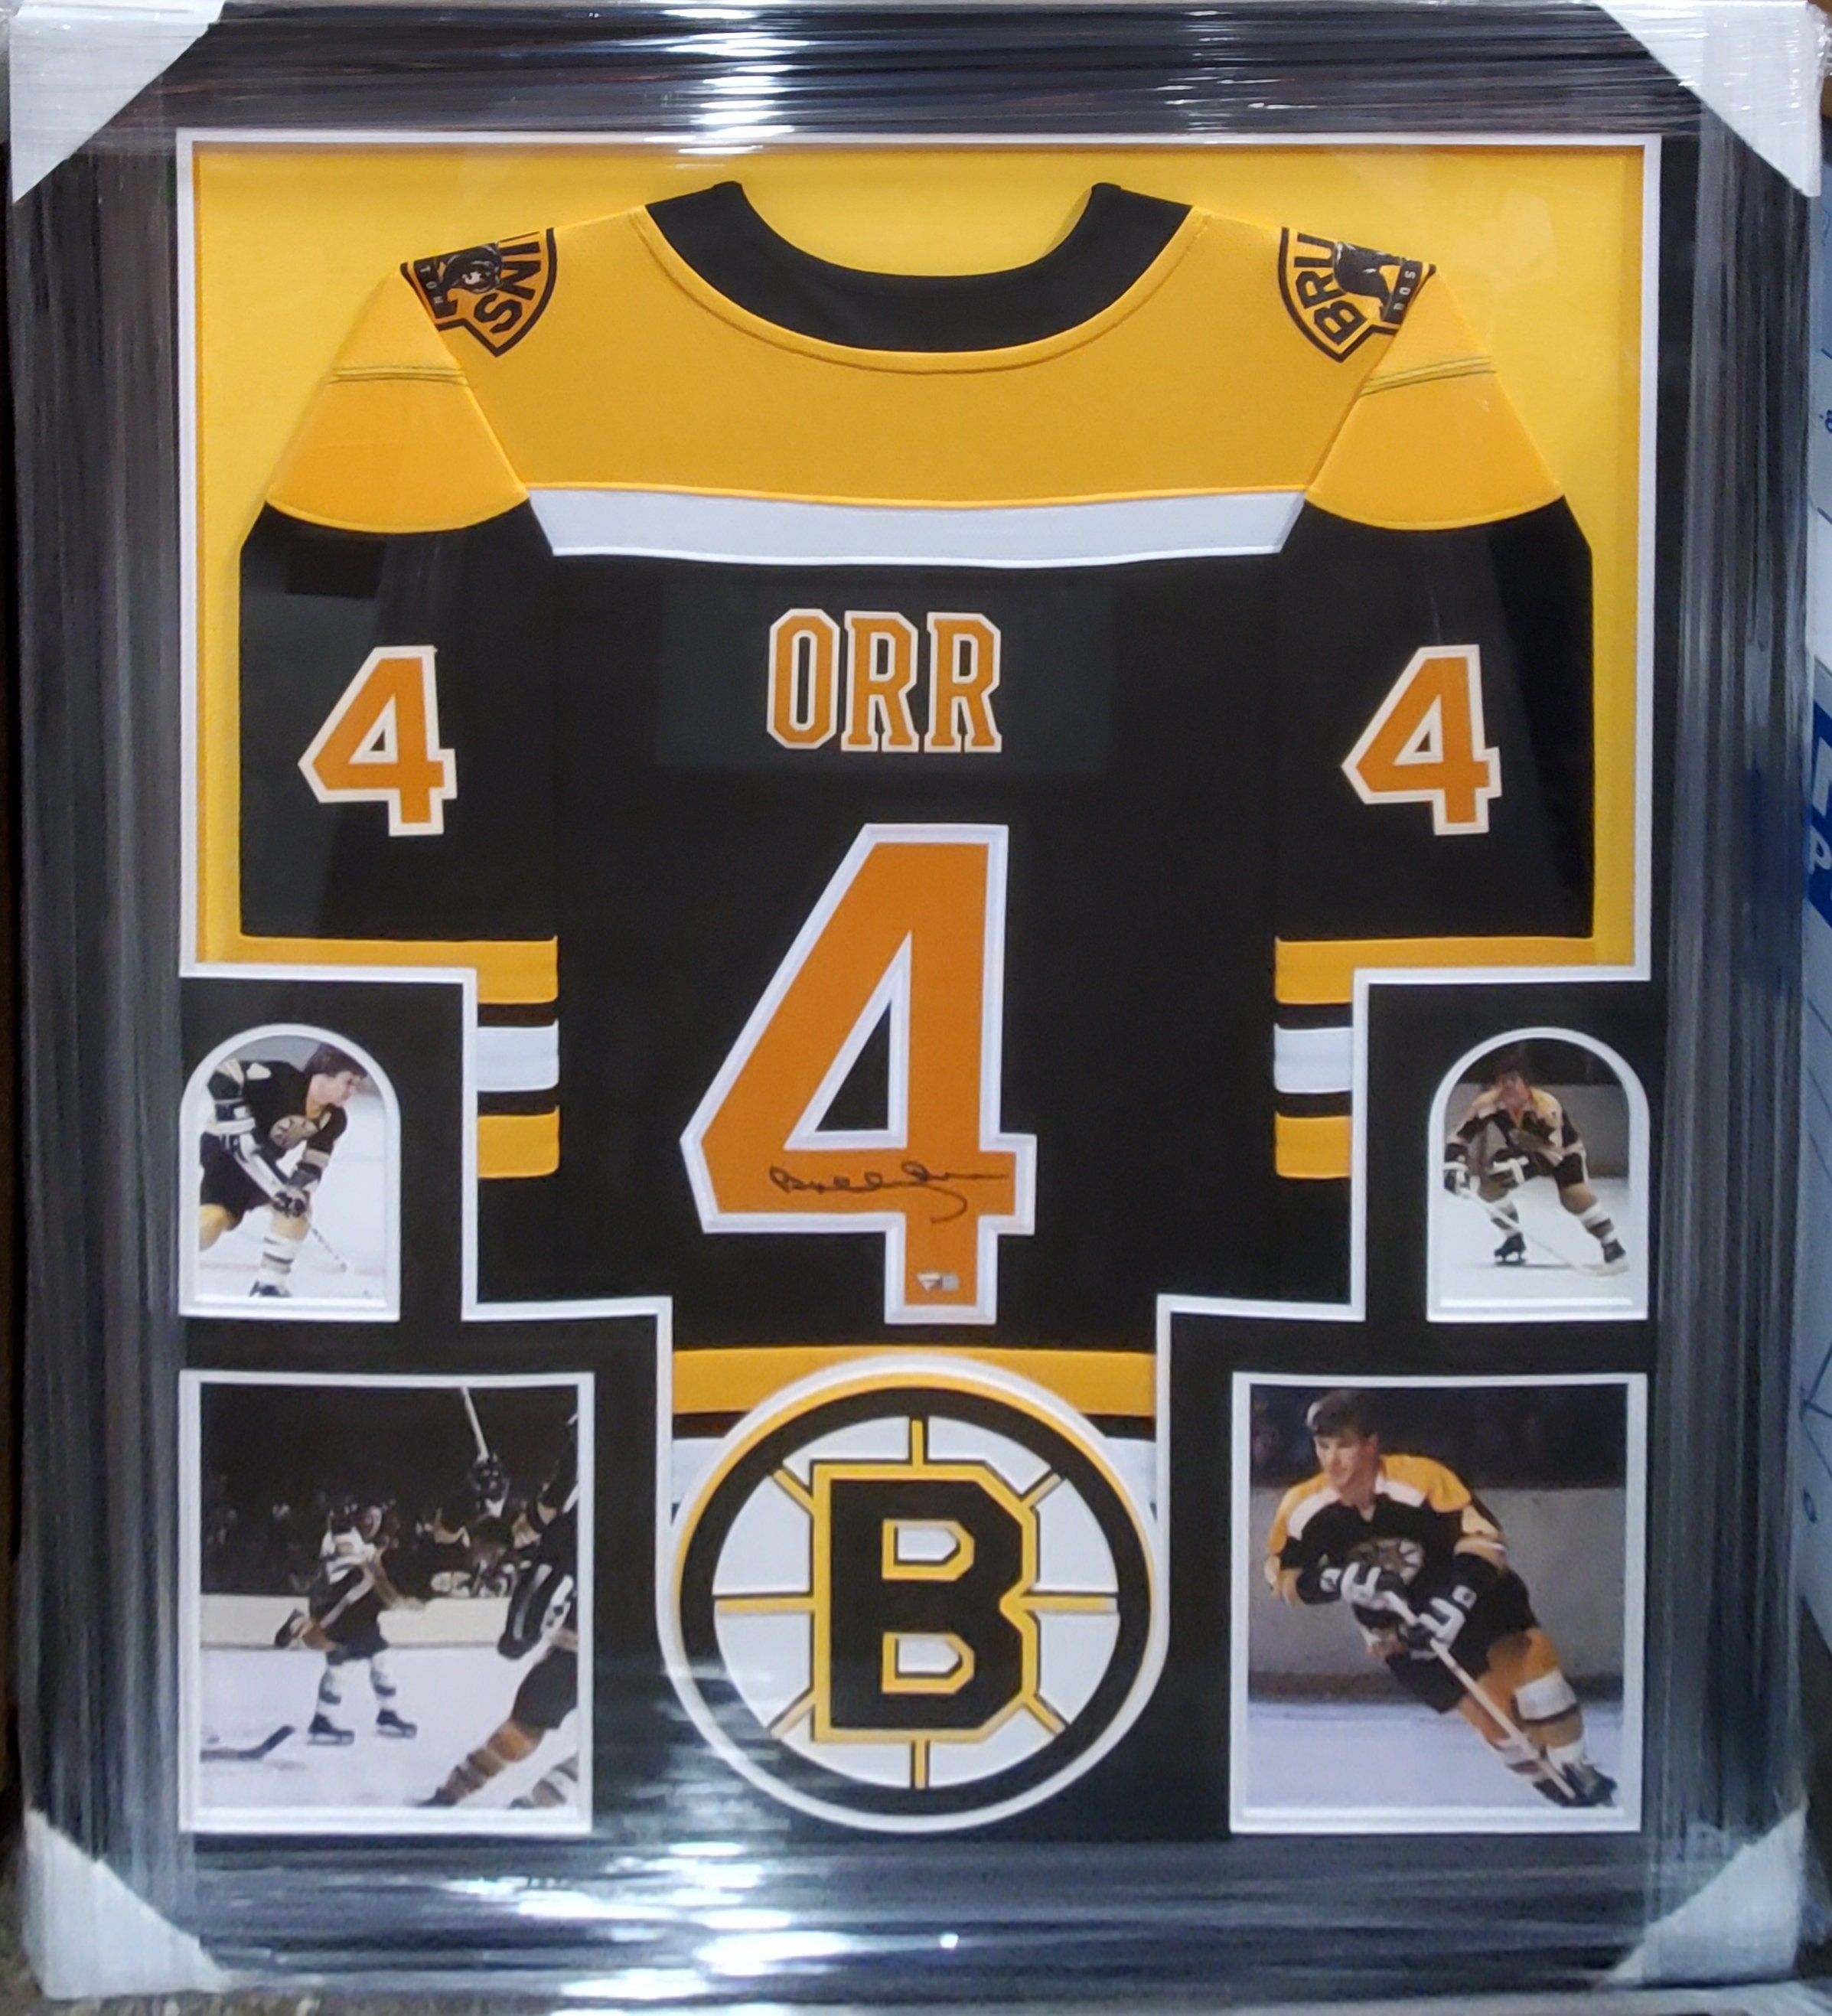 Cam Neely Boston Bruins Fanatics Authentic Autographed Black